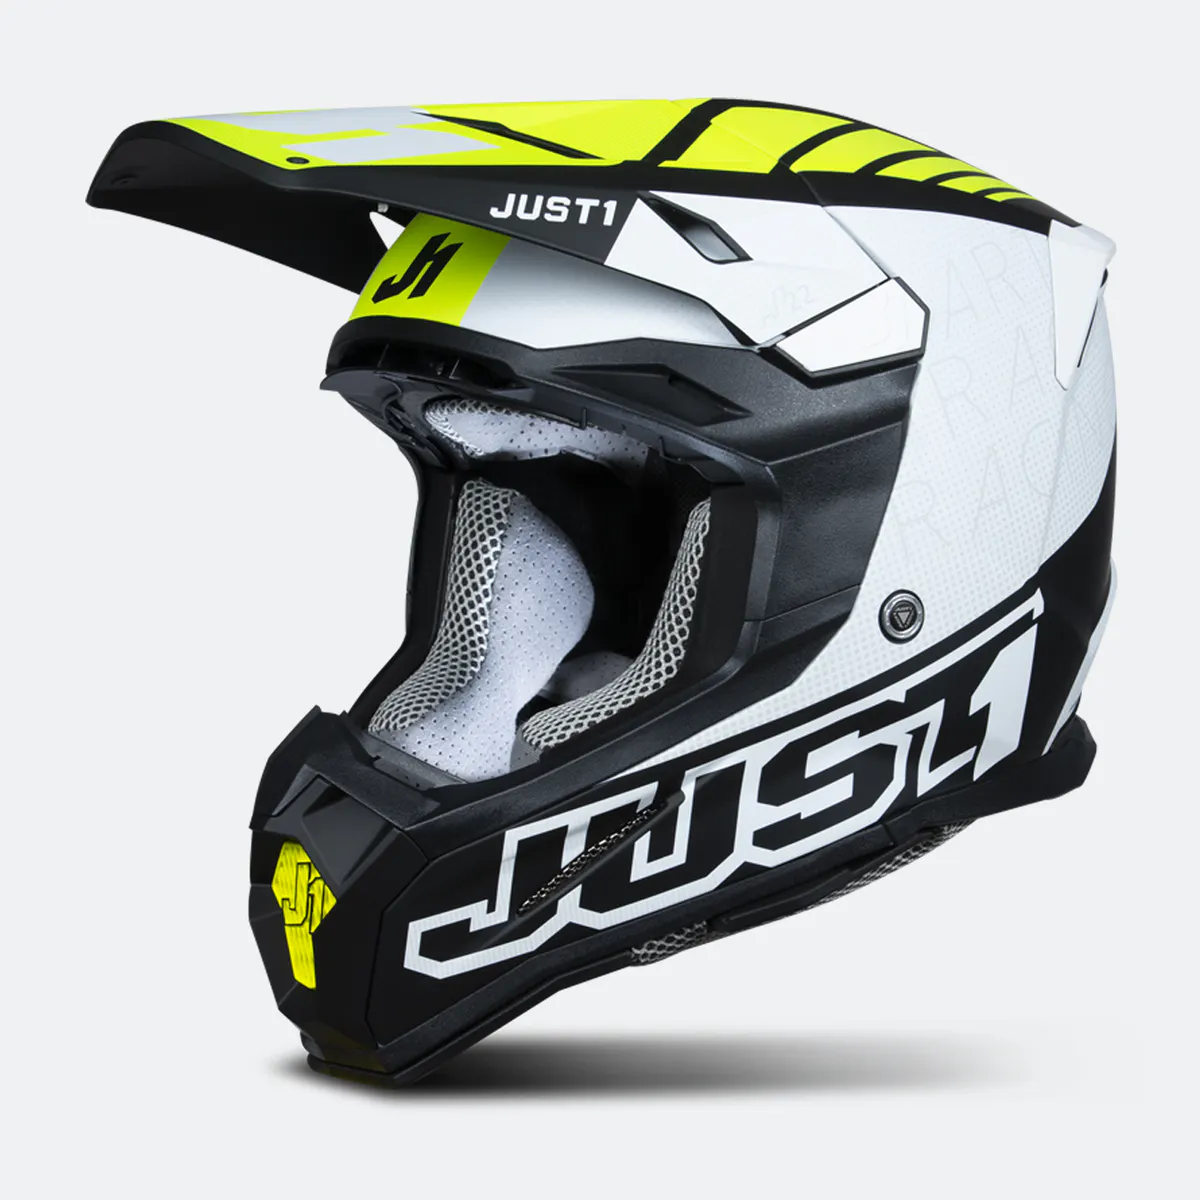 Just1 Helmet J-22 F Dynamo Fluo Yellow White Black - Sixstar Racing